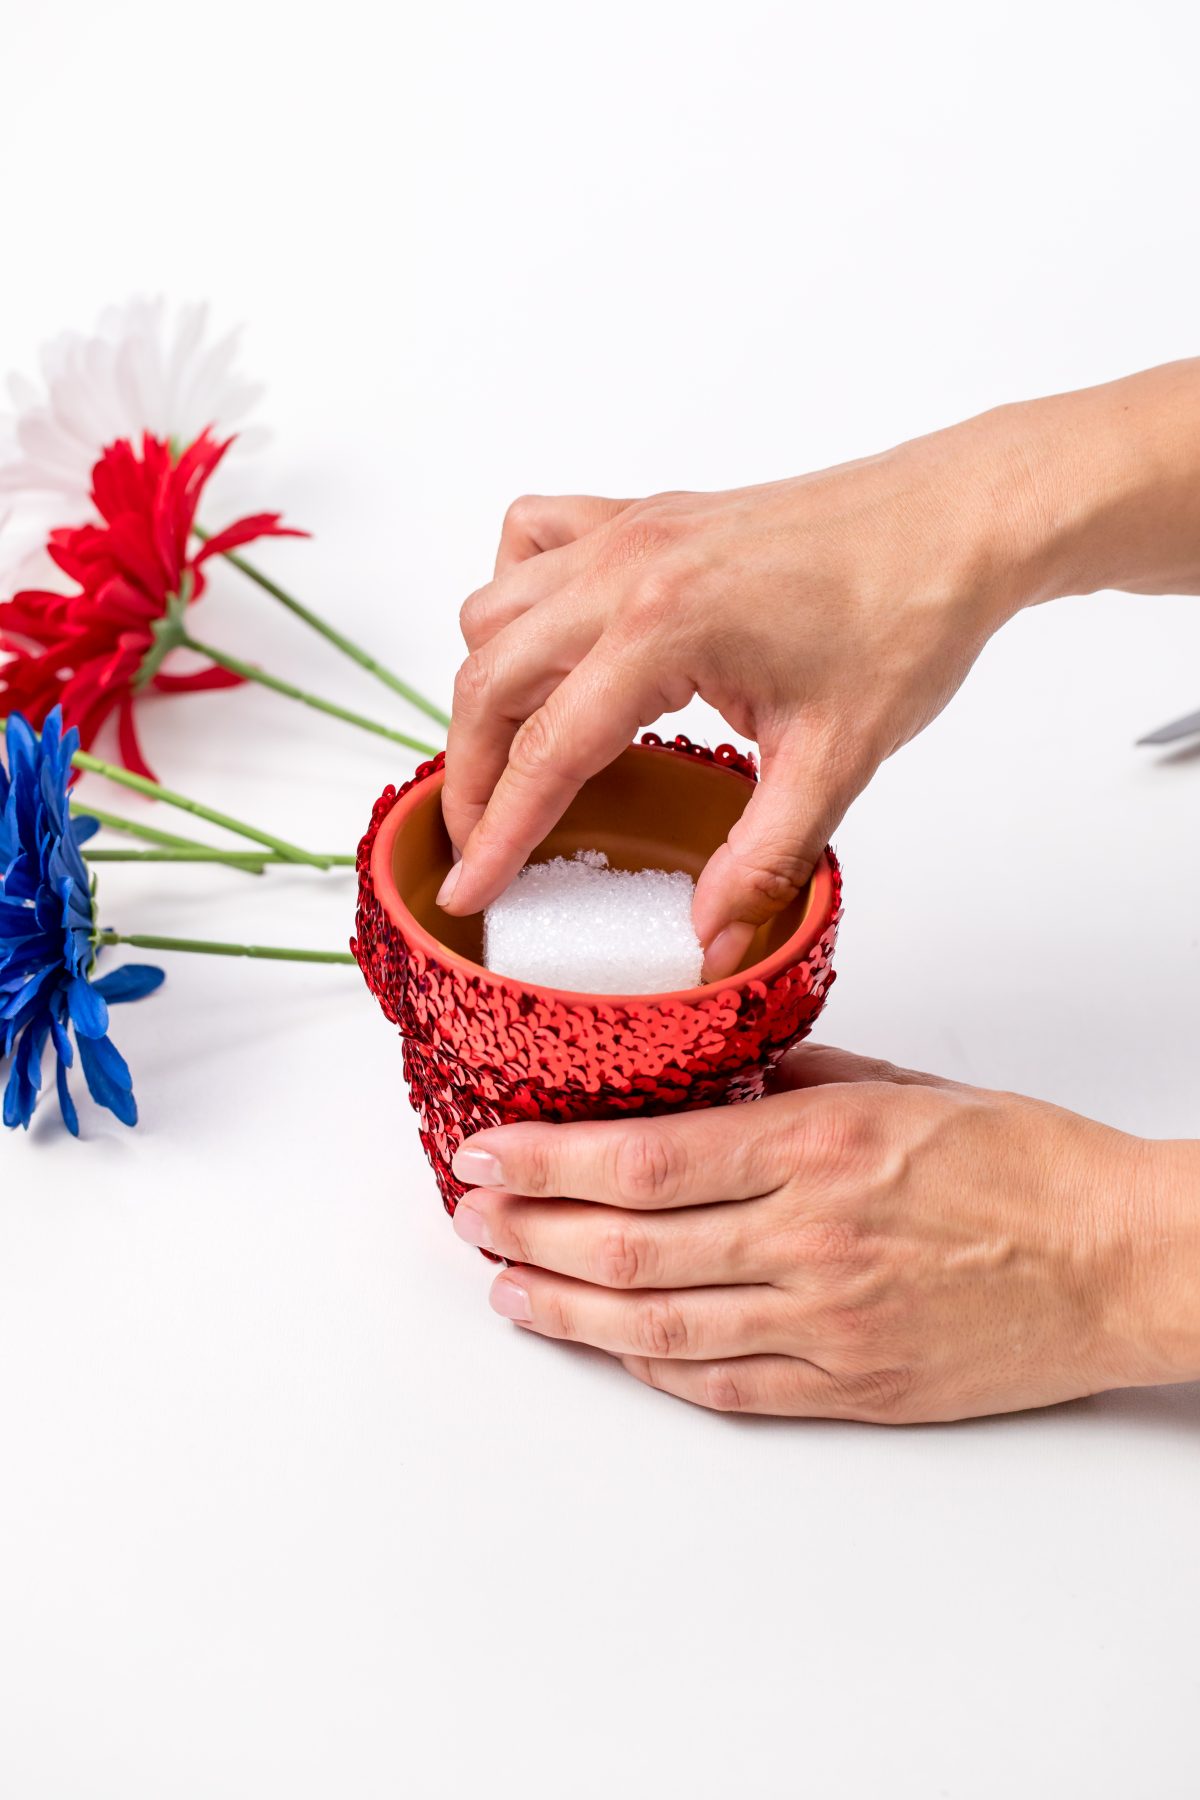 Place styrofoam inside of flower pot